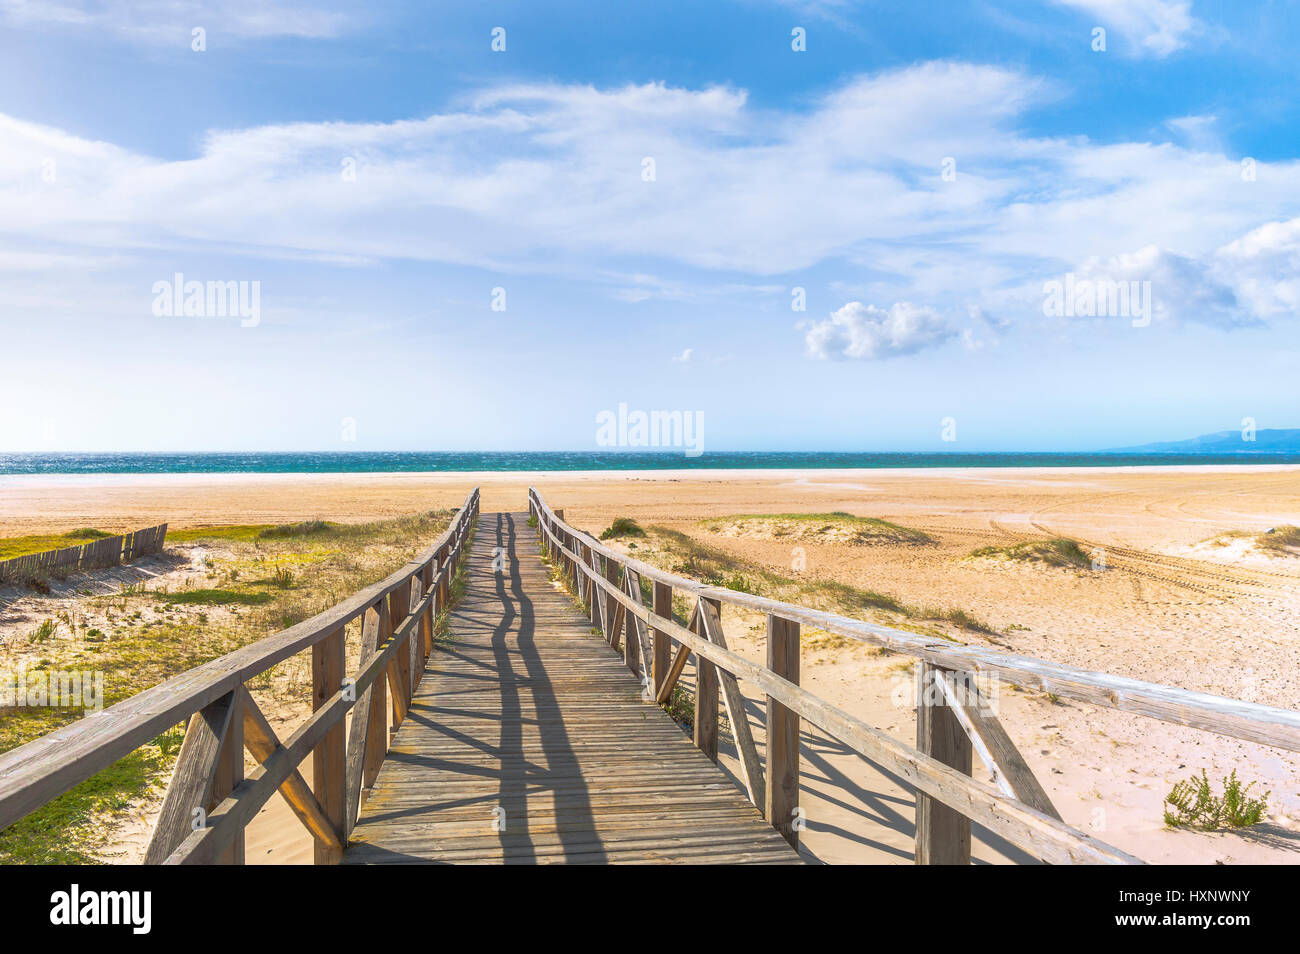 The beach of Tarifa, coast of Atlantic Ocean, province of Cádiz, Andalusia, Spain Stock Photo